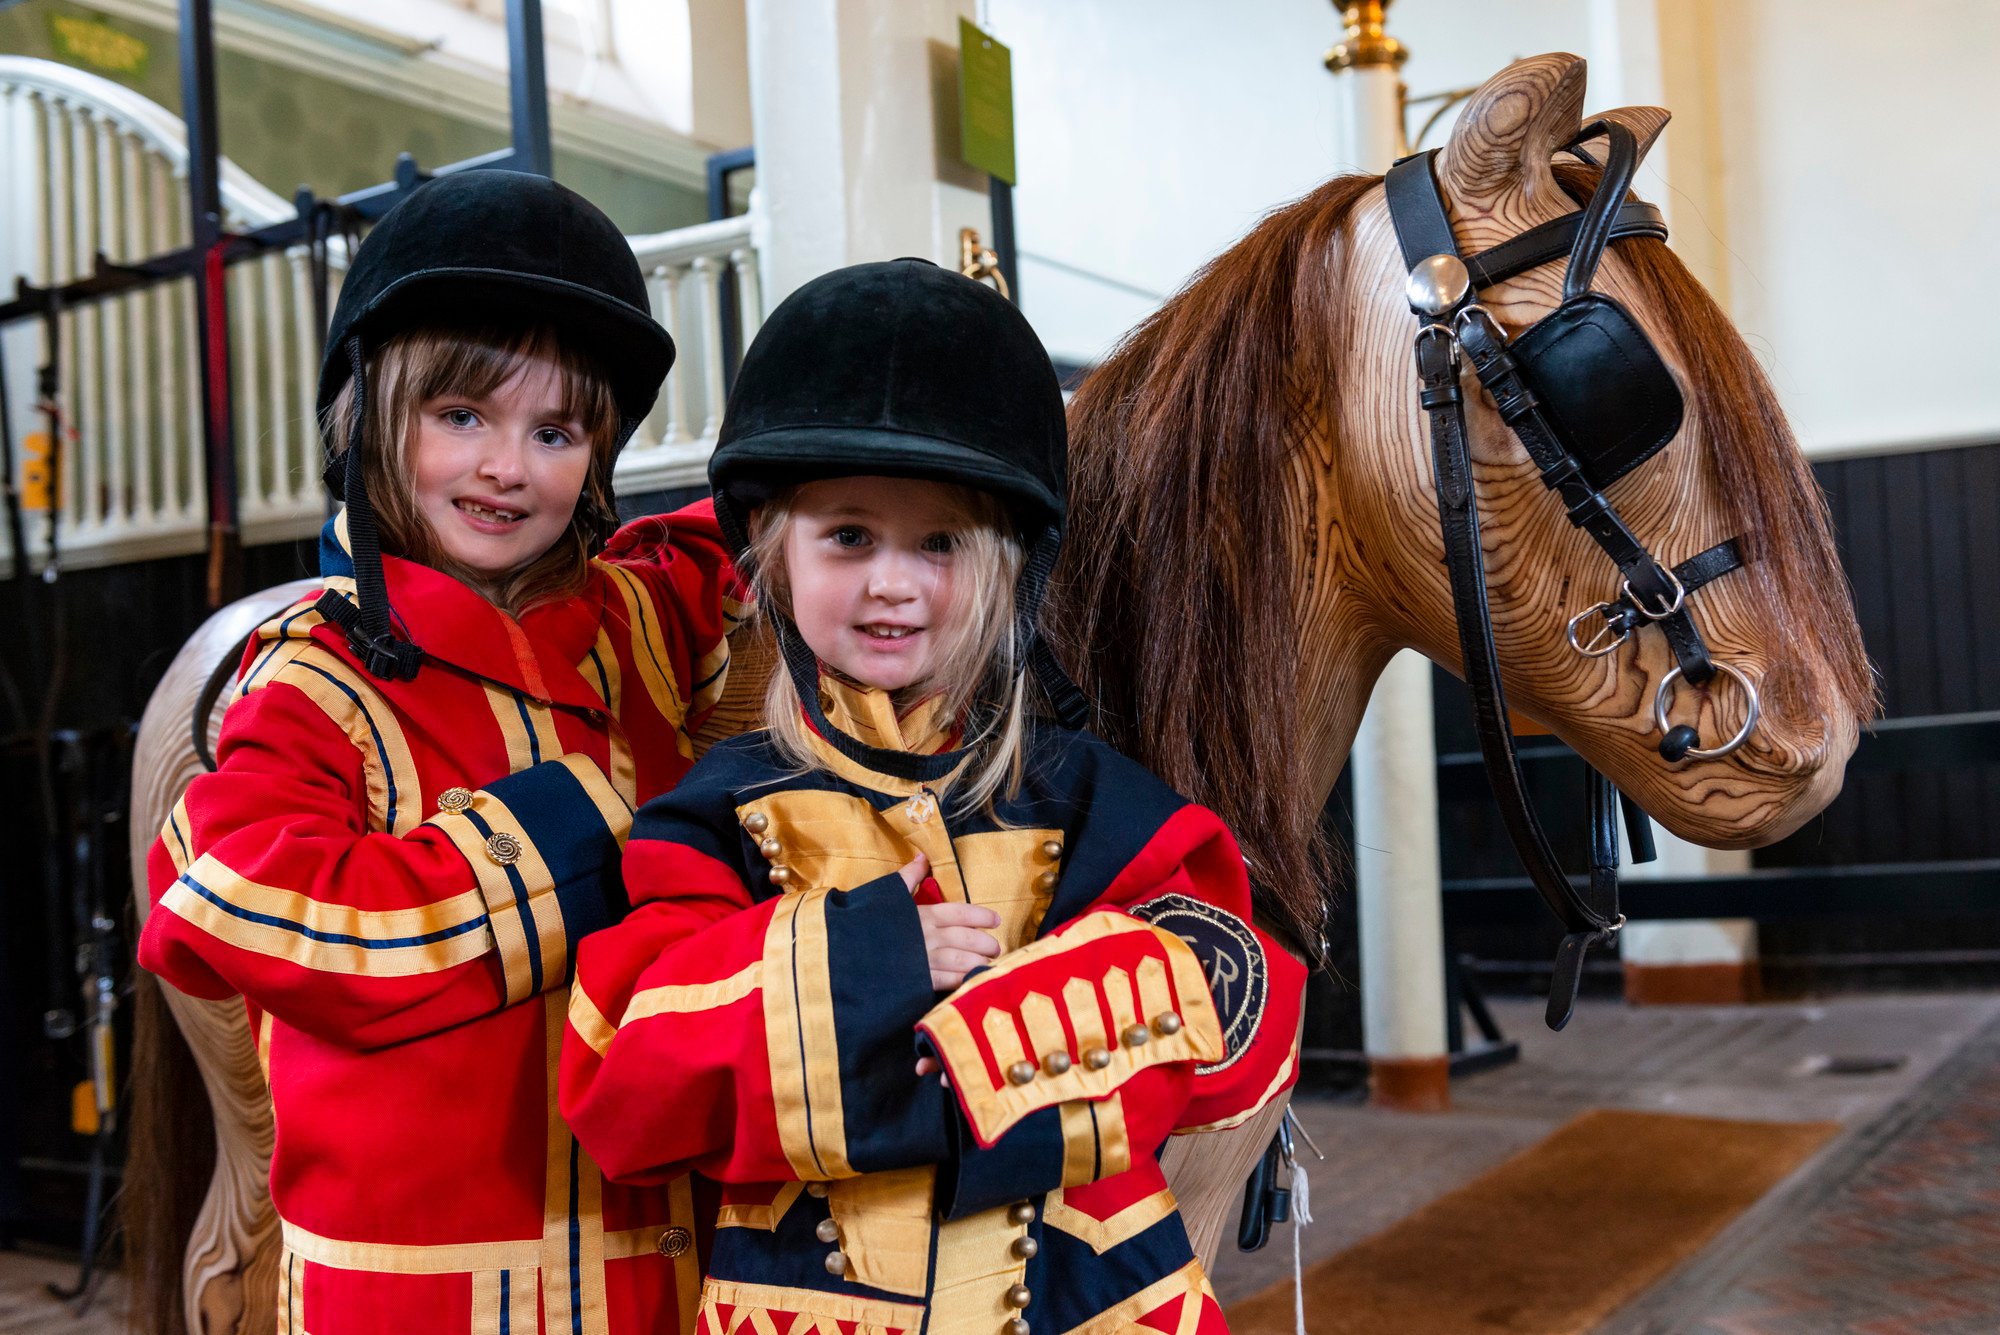 Children dressing up next to a wooden horse